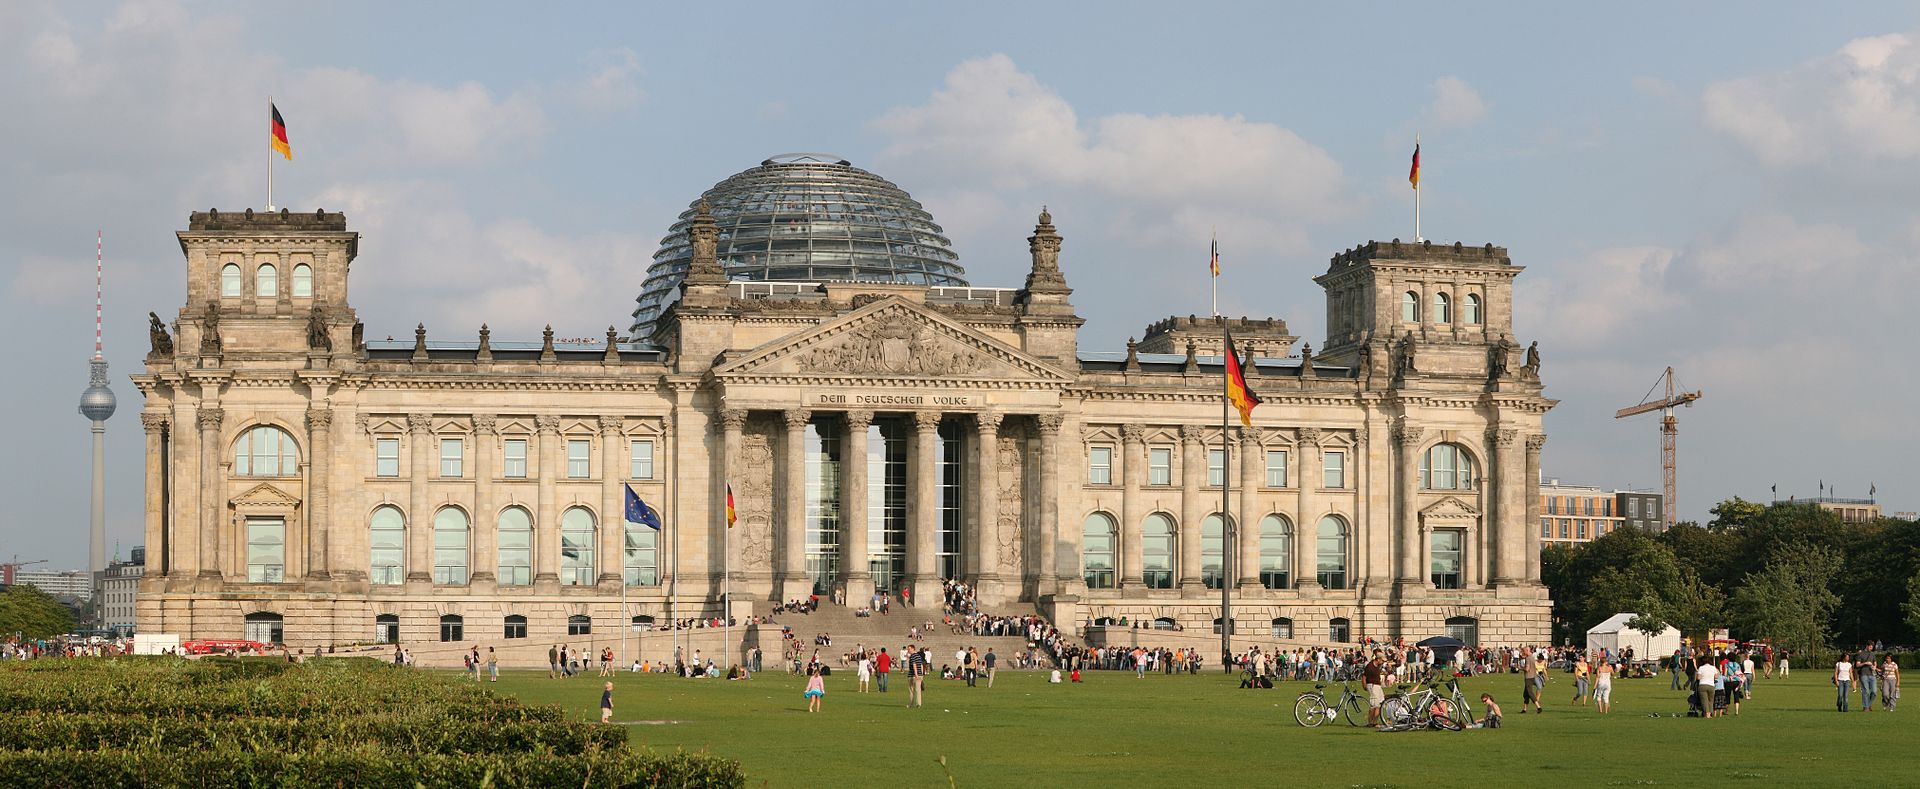 Reichstag_pano.jpg, 285kB